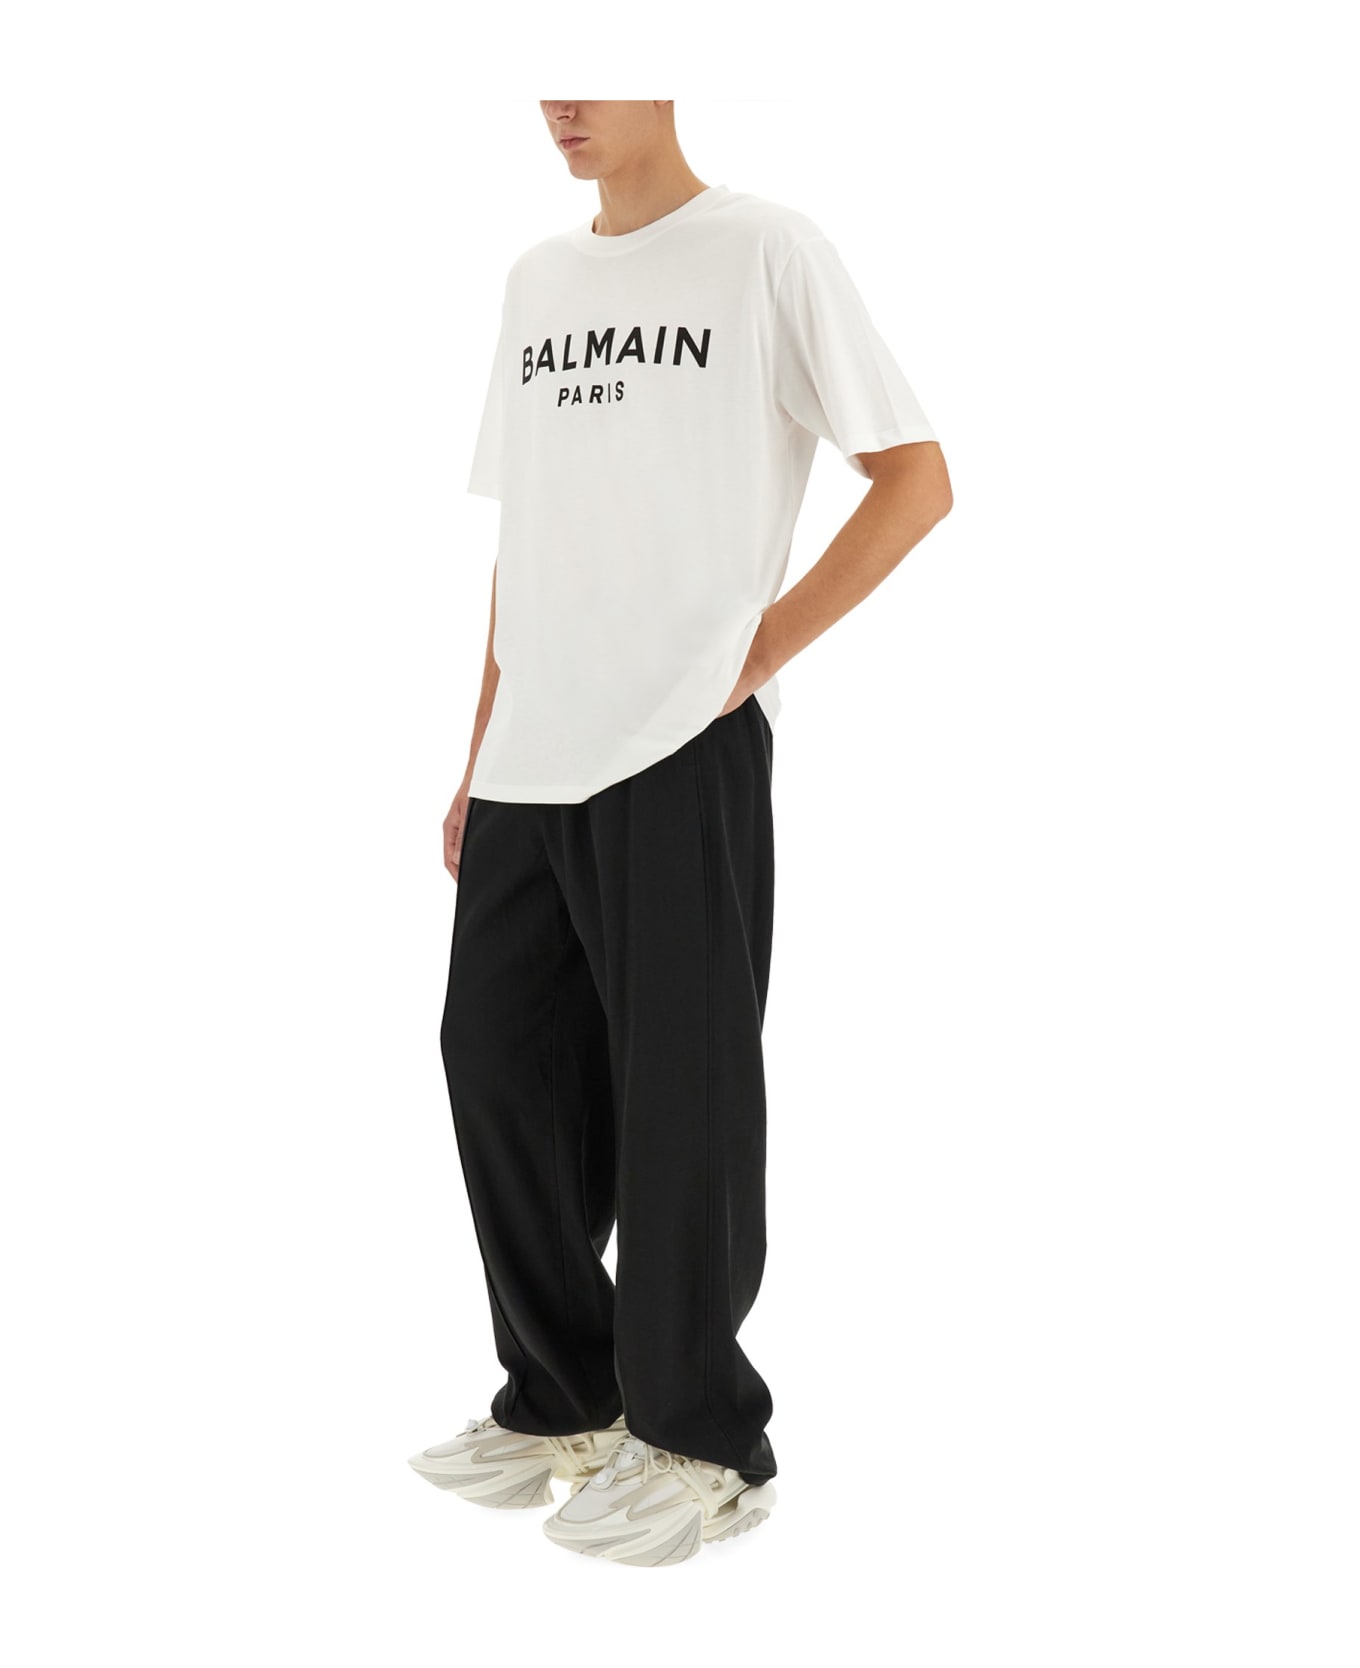 Balmain Logo Print T-shirt - BIANCO NERO シャツ